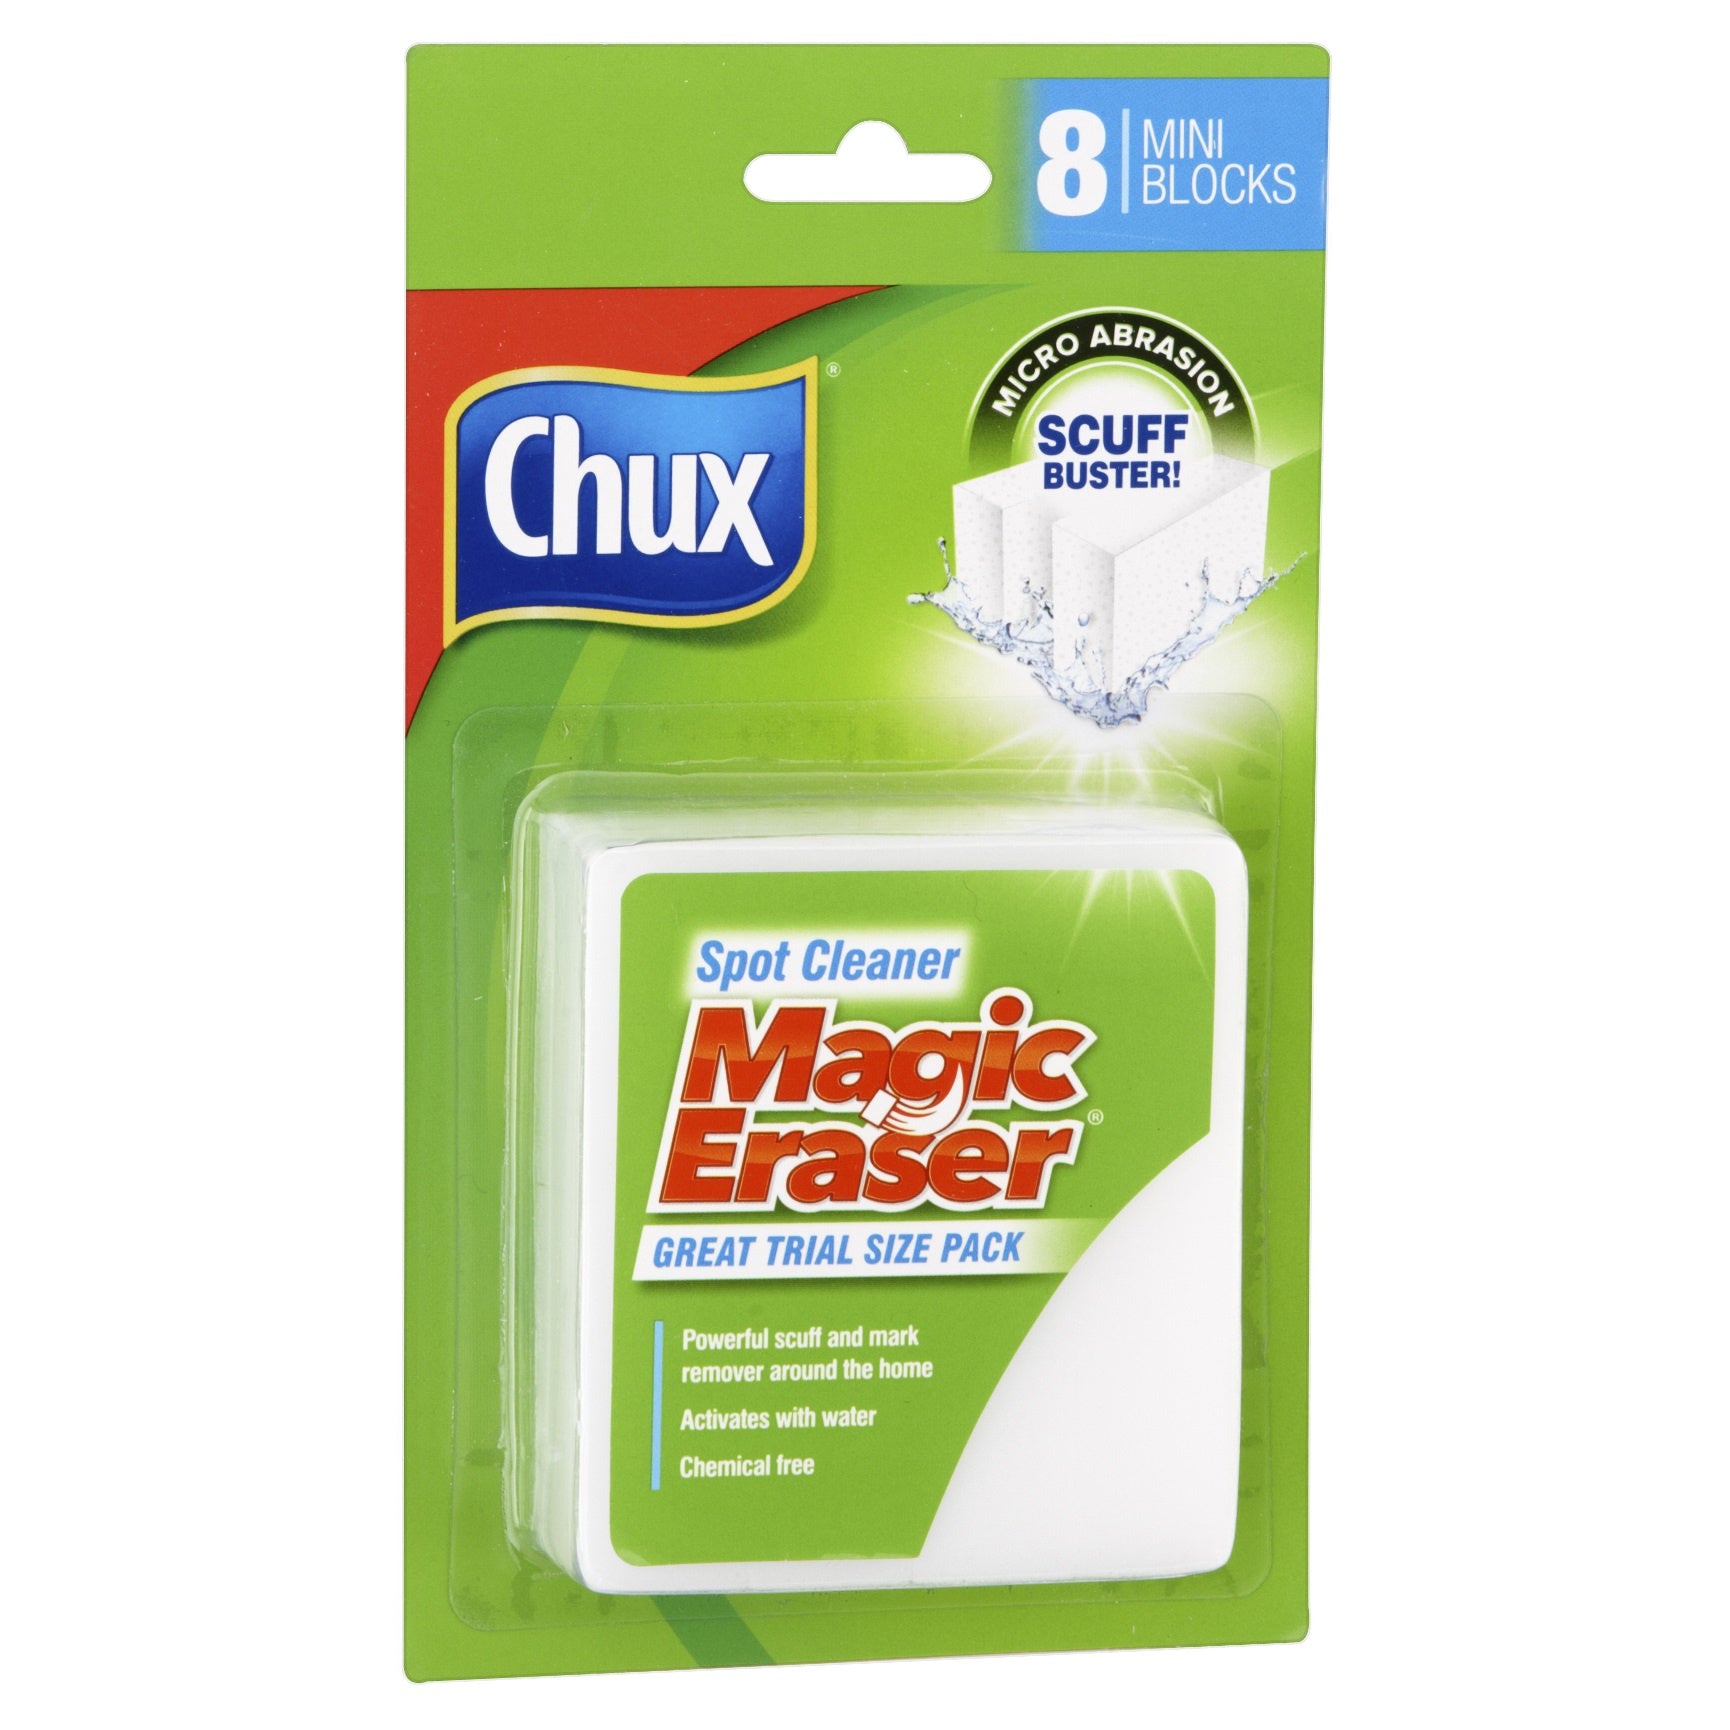 Chux Magic Eraser Mini Blocks 8pk